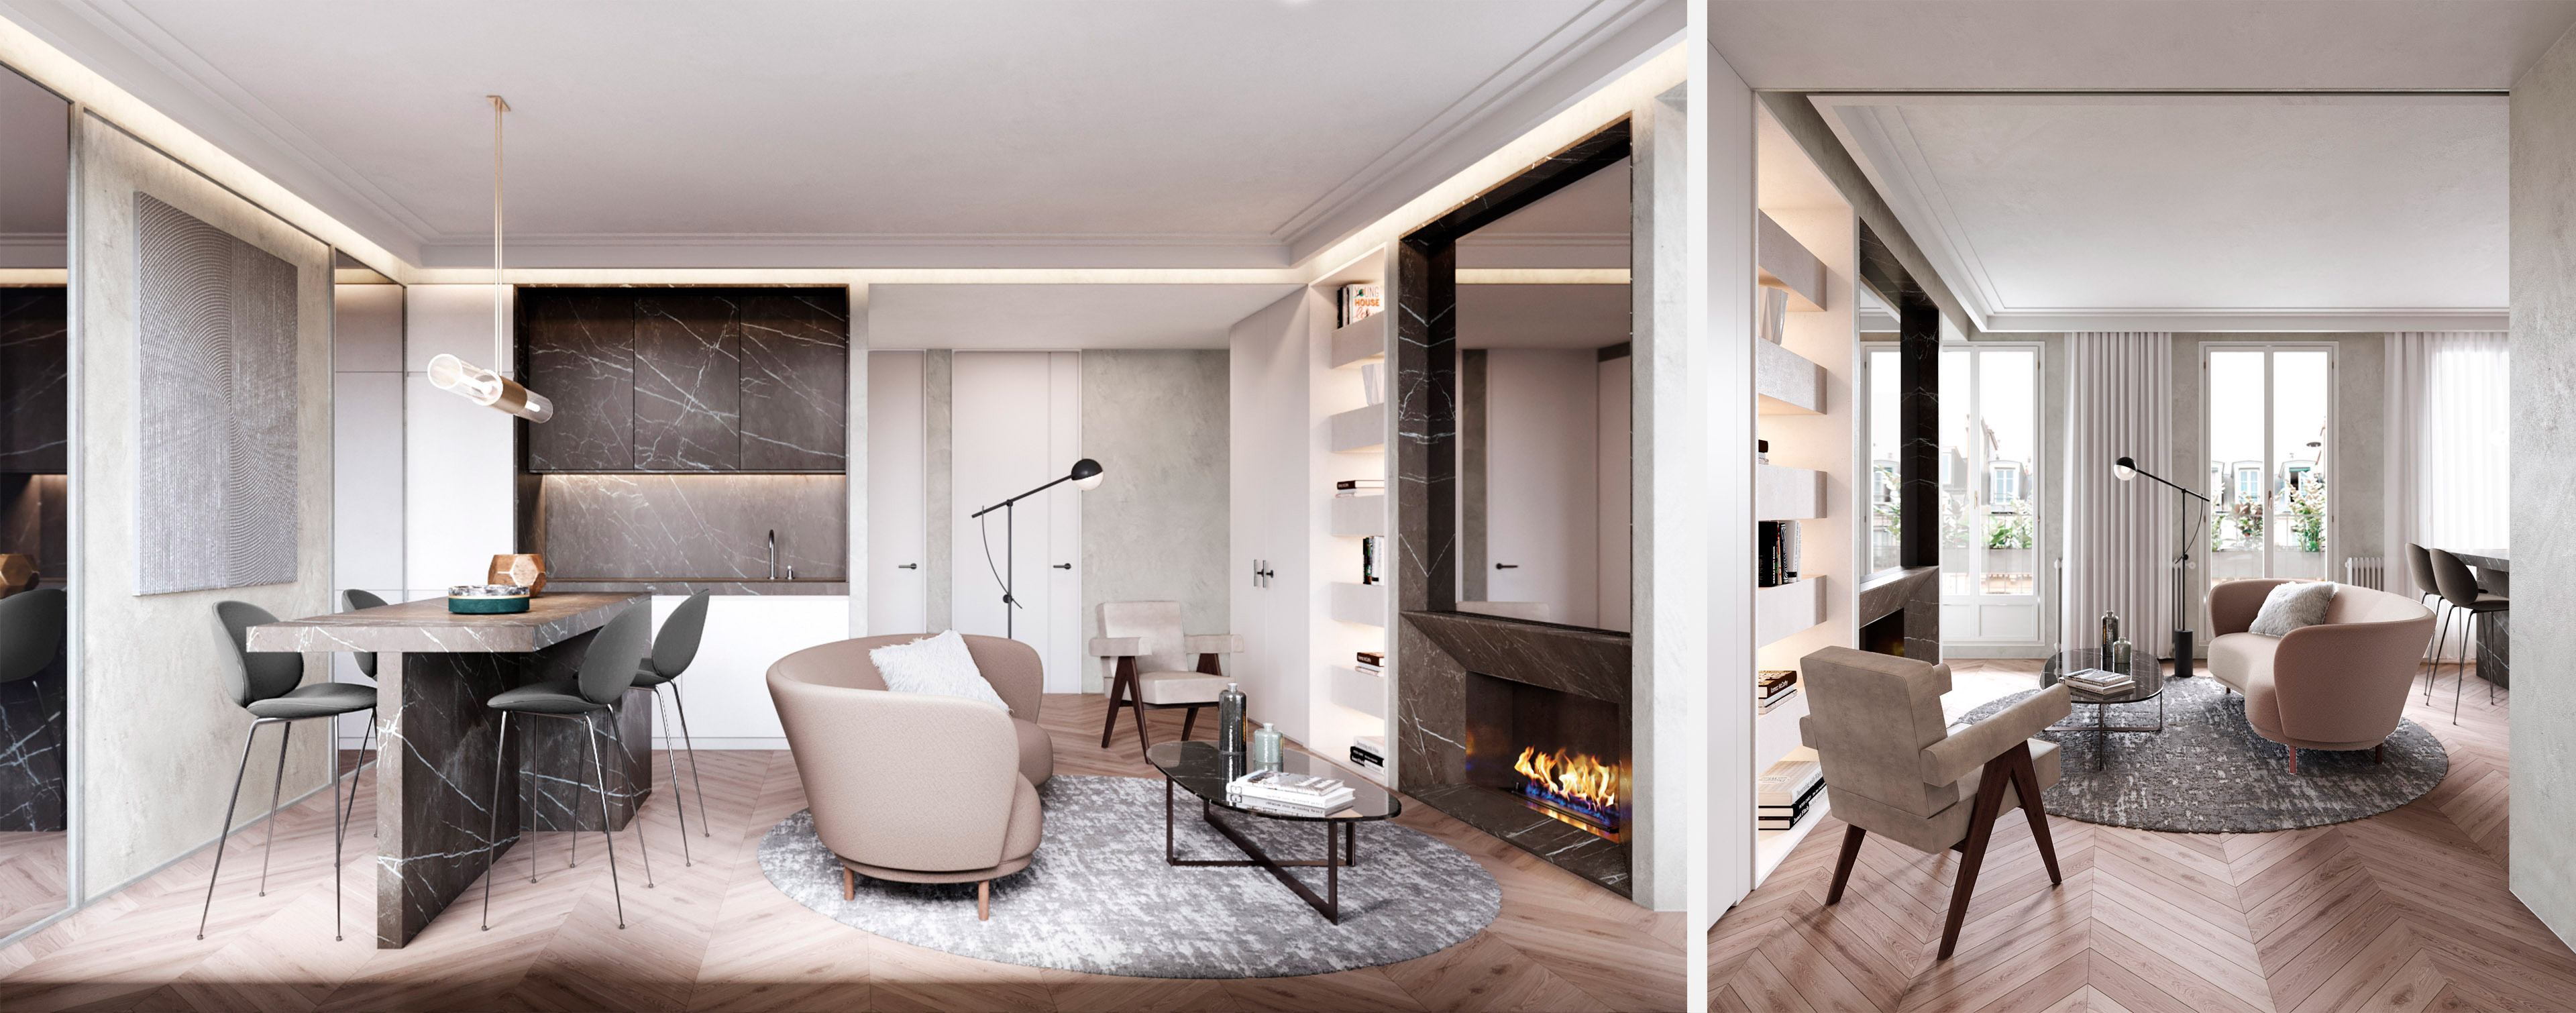 luv studio luxury architects paris rue oudinot apartment IMG 01 - Rue Oudinot Apartment